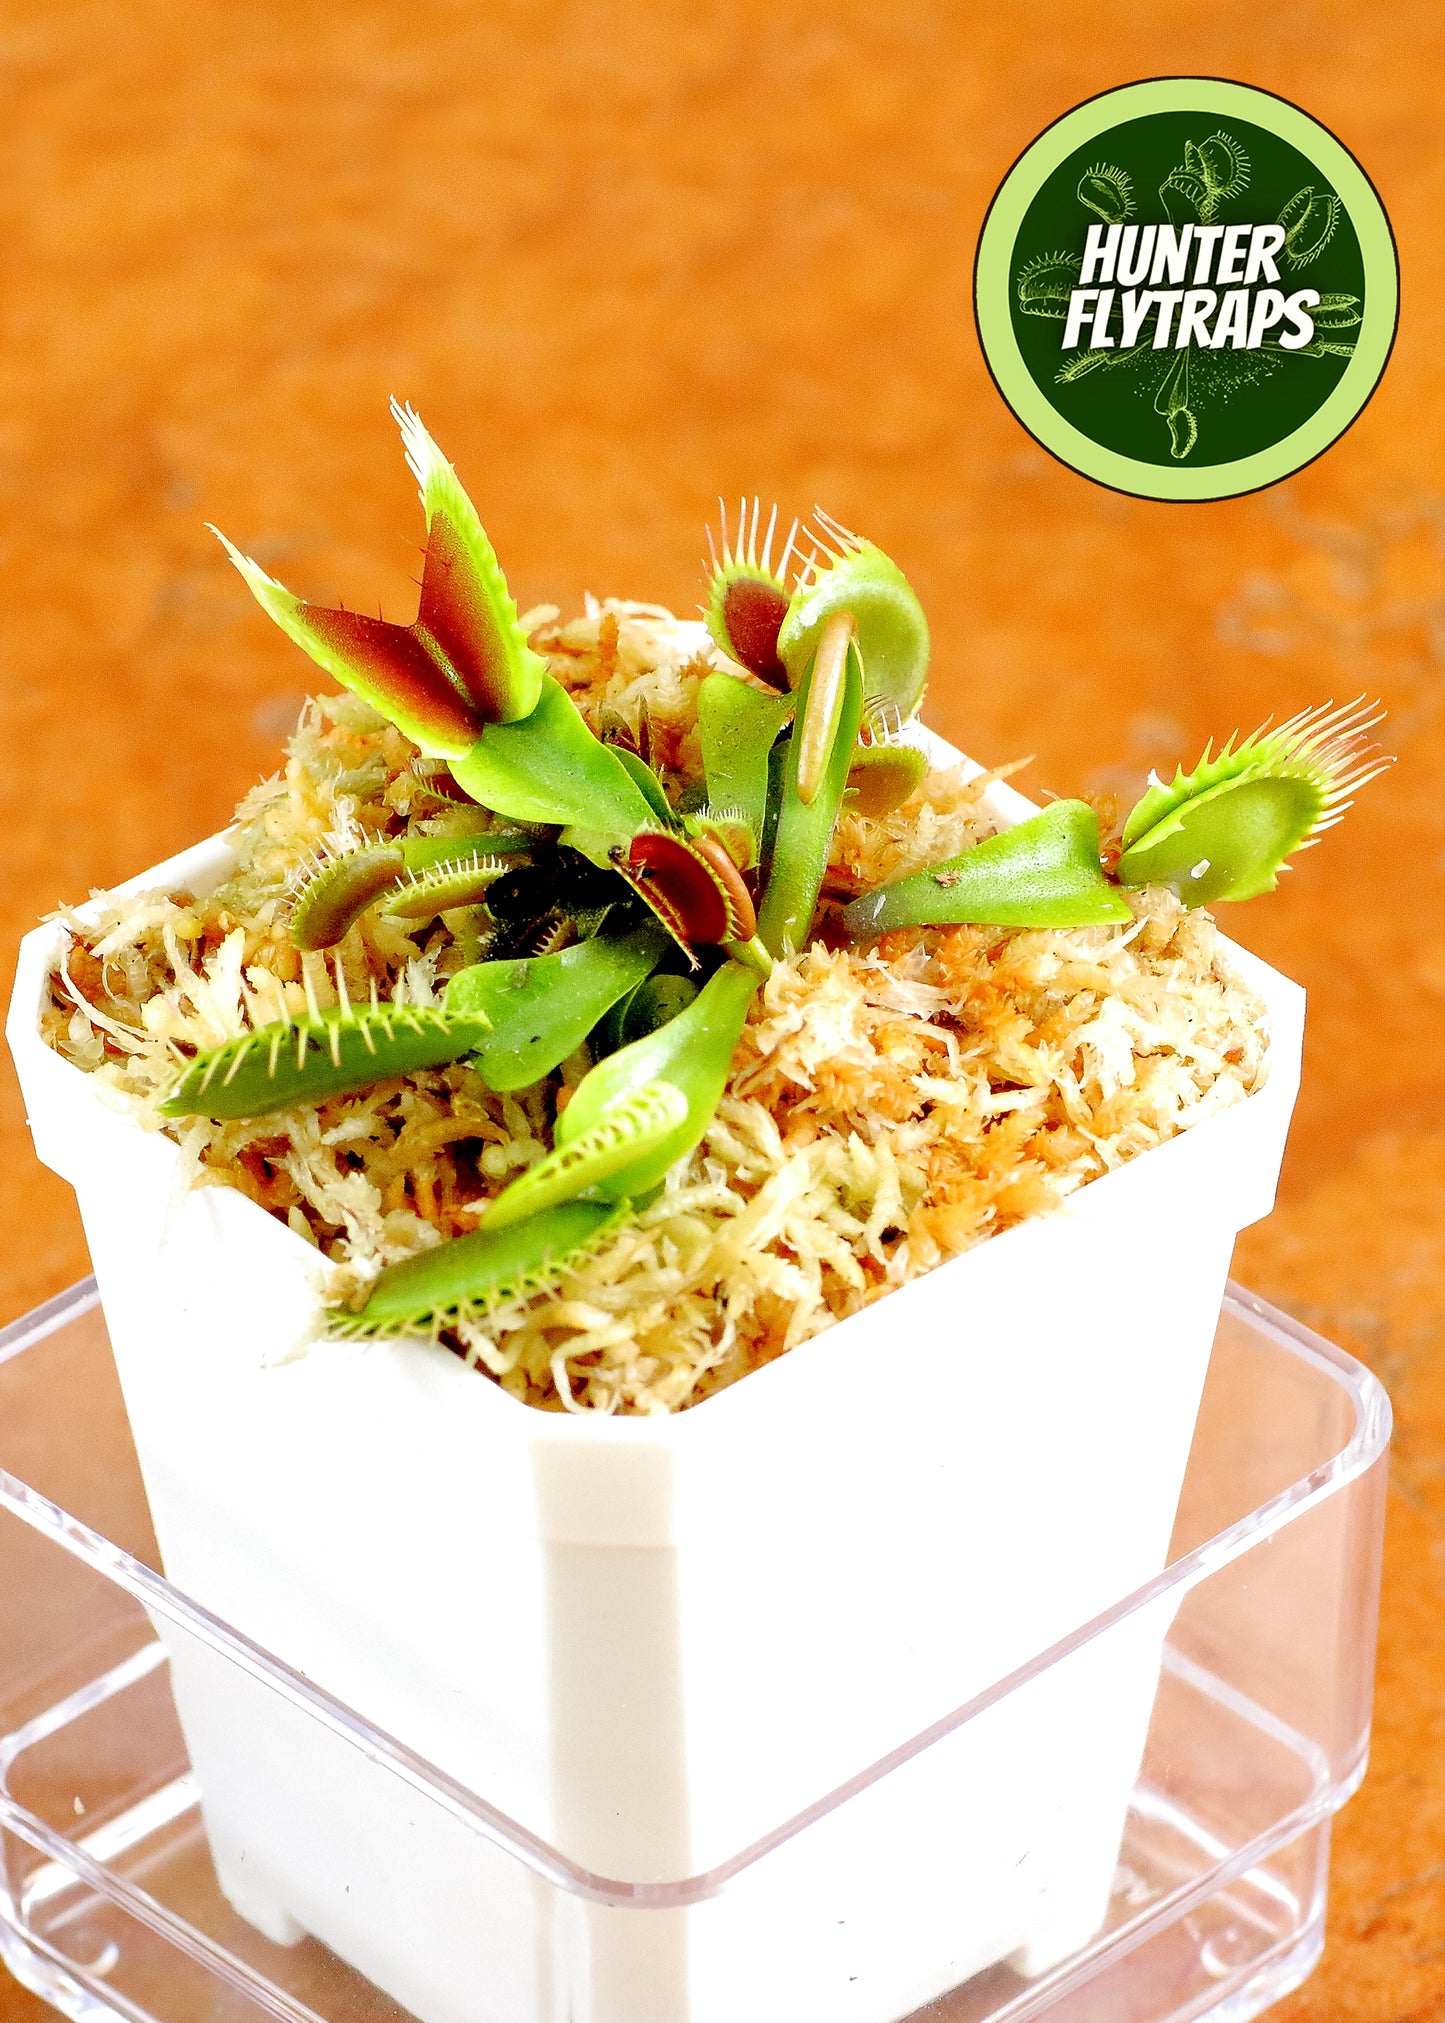 Jaws x Petite Dragon - Venus Flytrap Carnivorous Plant